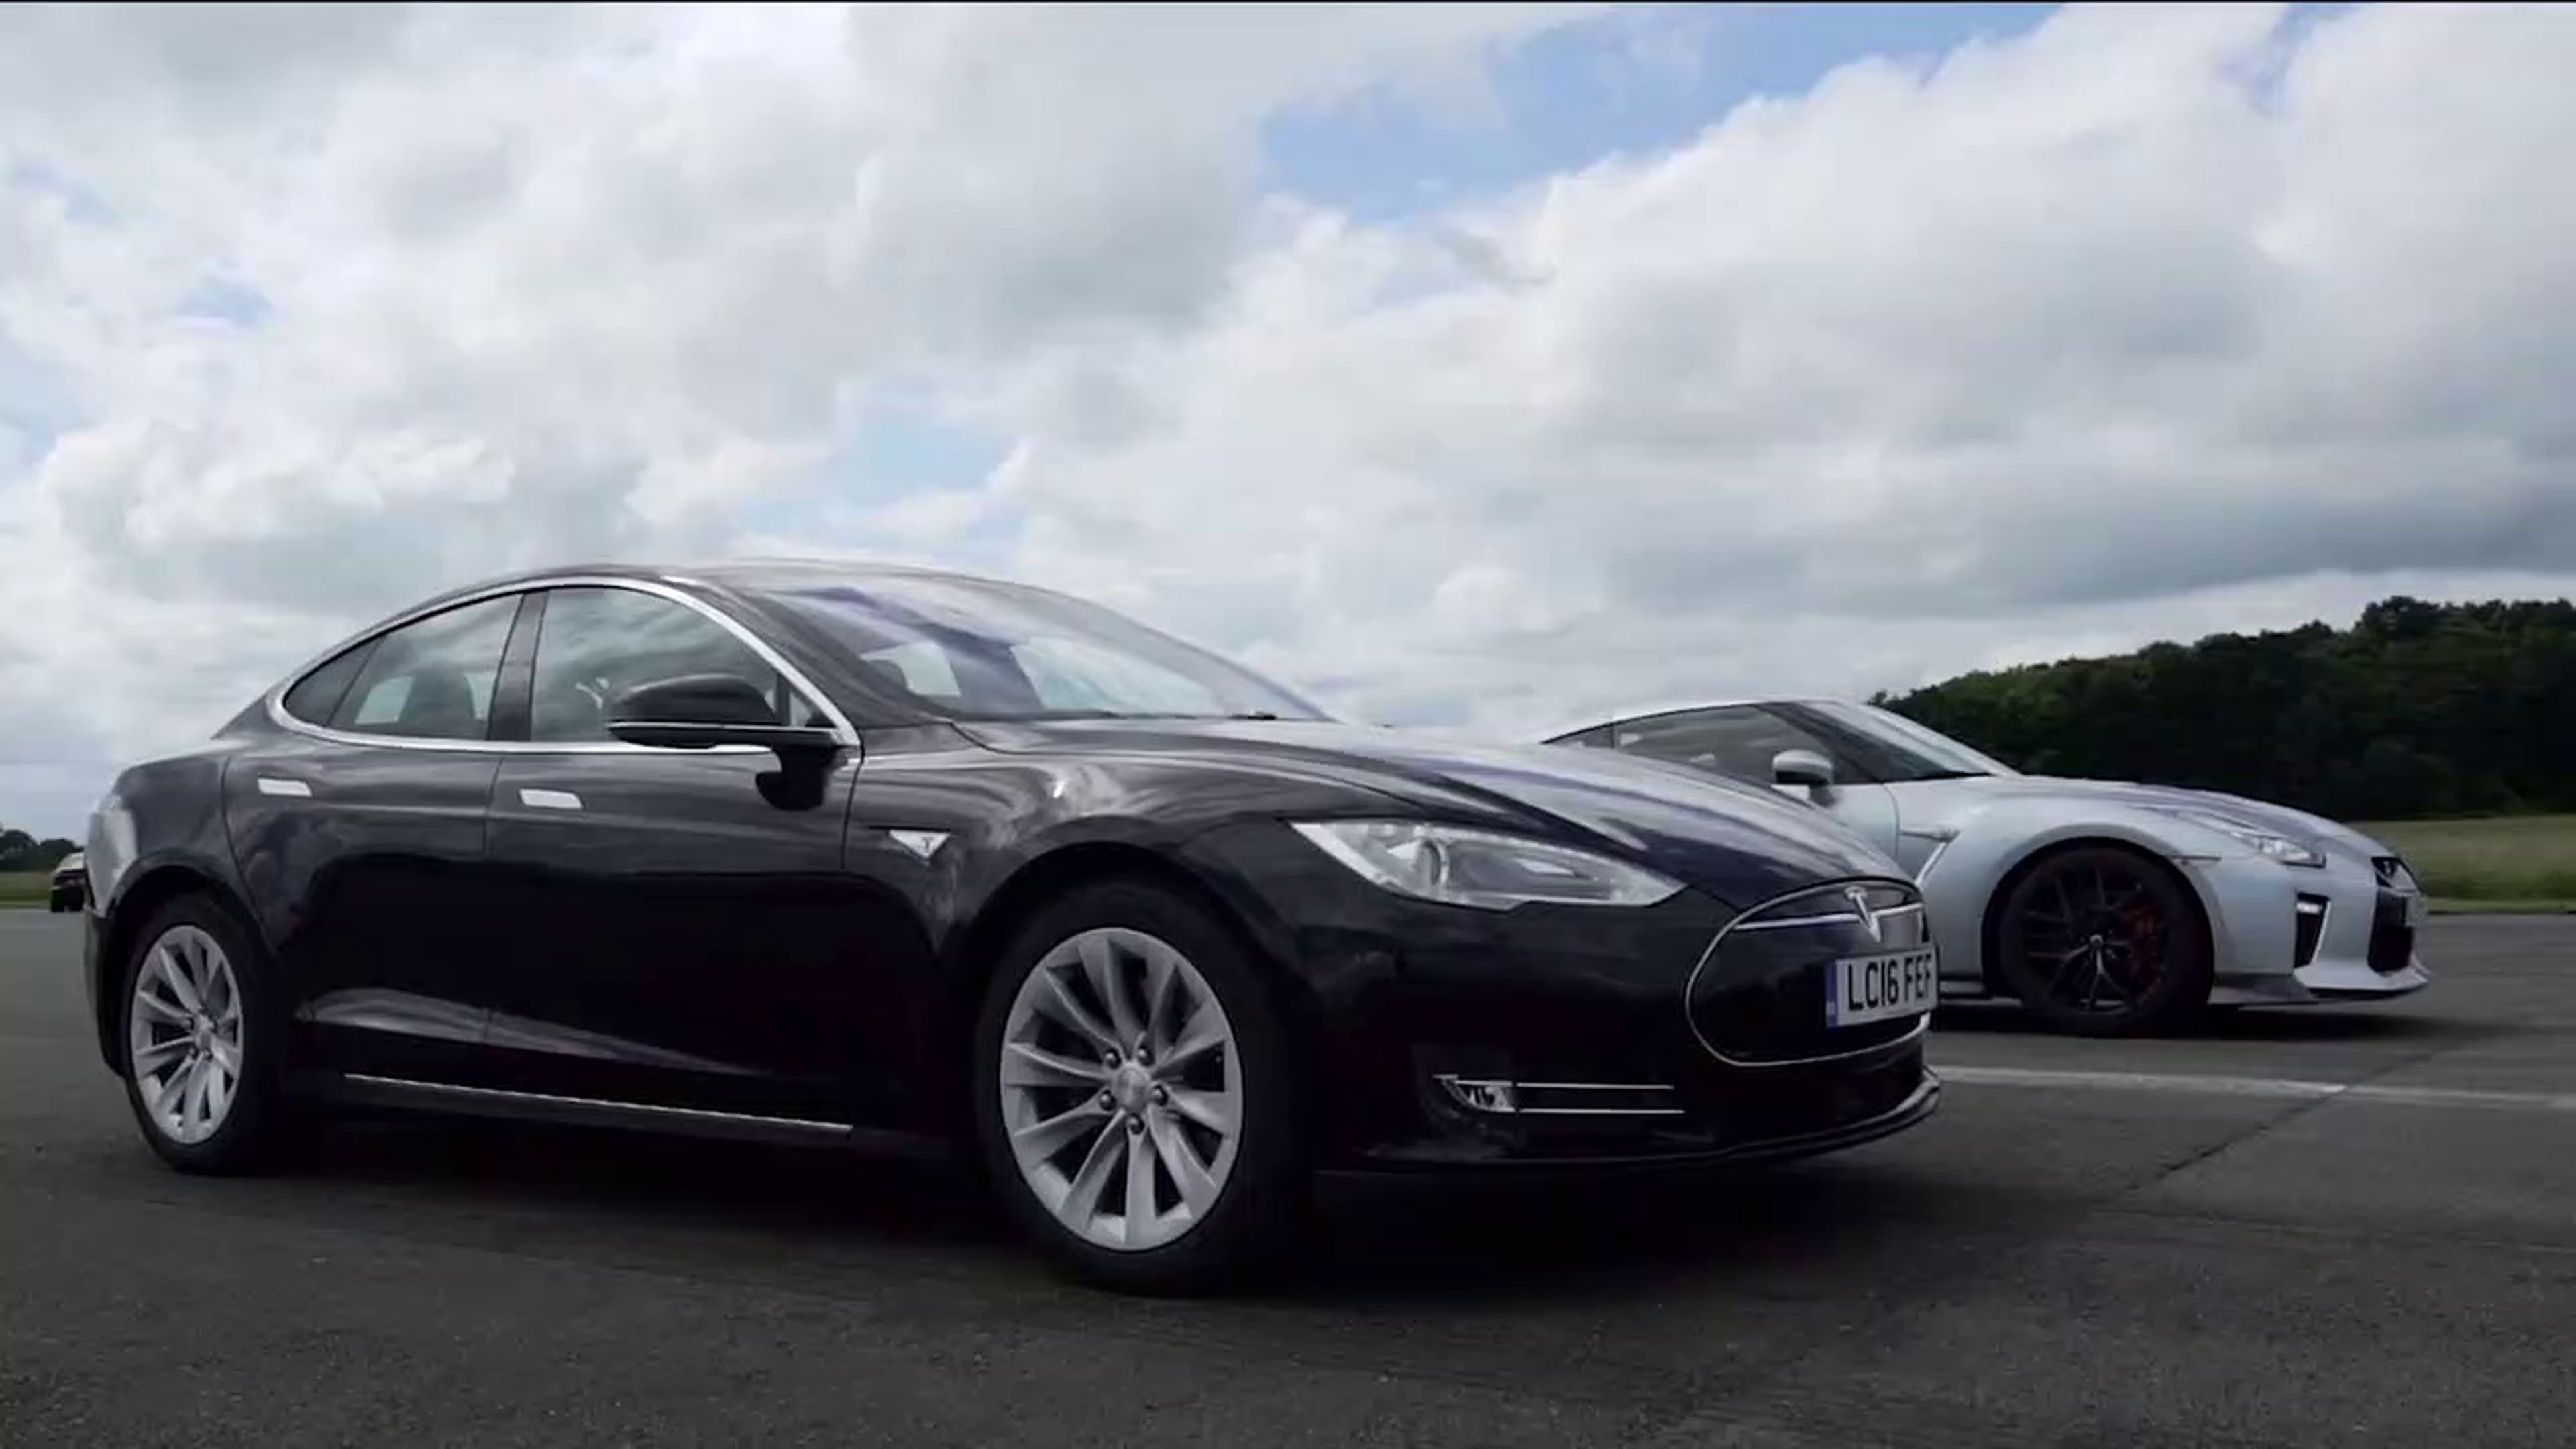 VÍDEO: Nissan GT-R vs Tesla Model S P90D, ¿Cuál acelera más? Descúbrelo